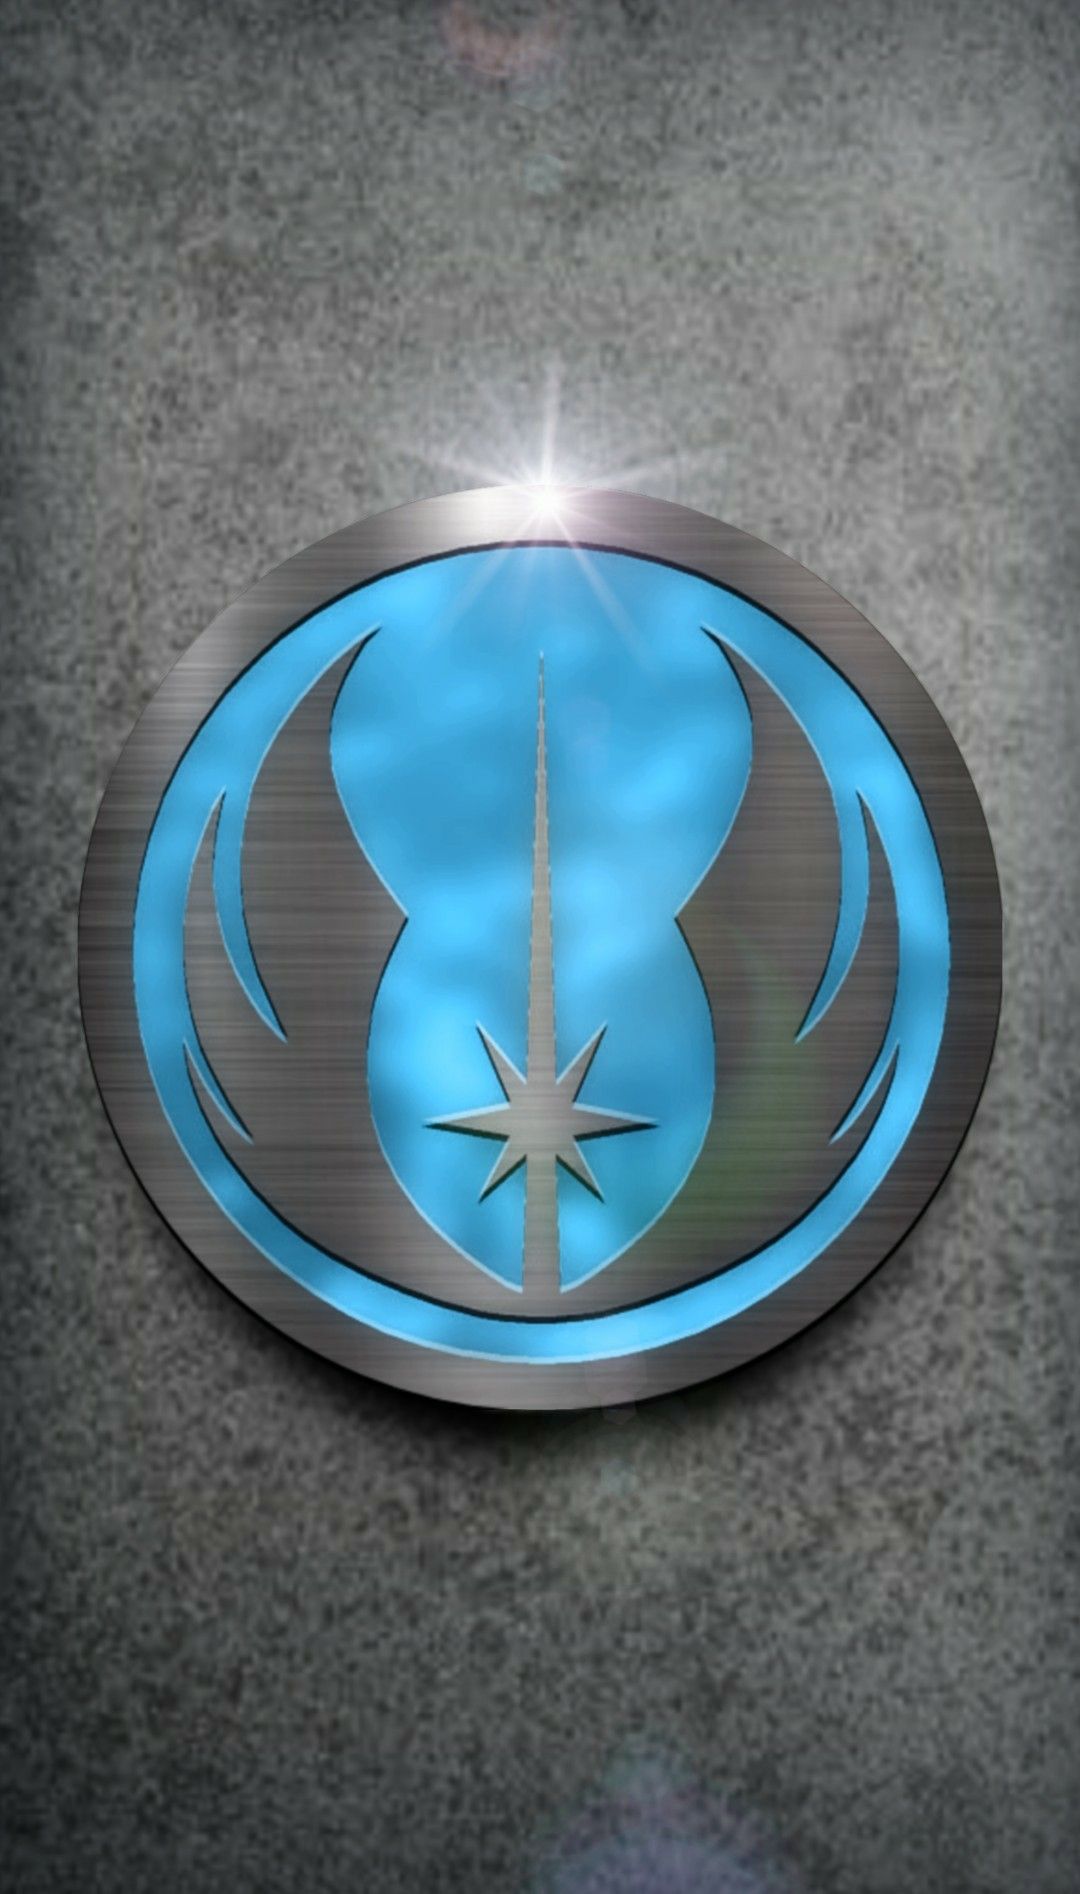 Star Wars Jedi Order Logo Wallpaper Image